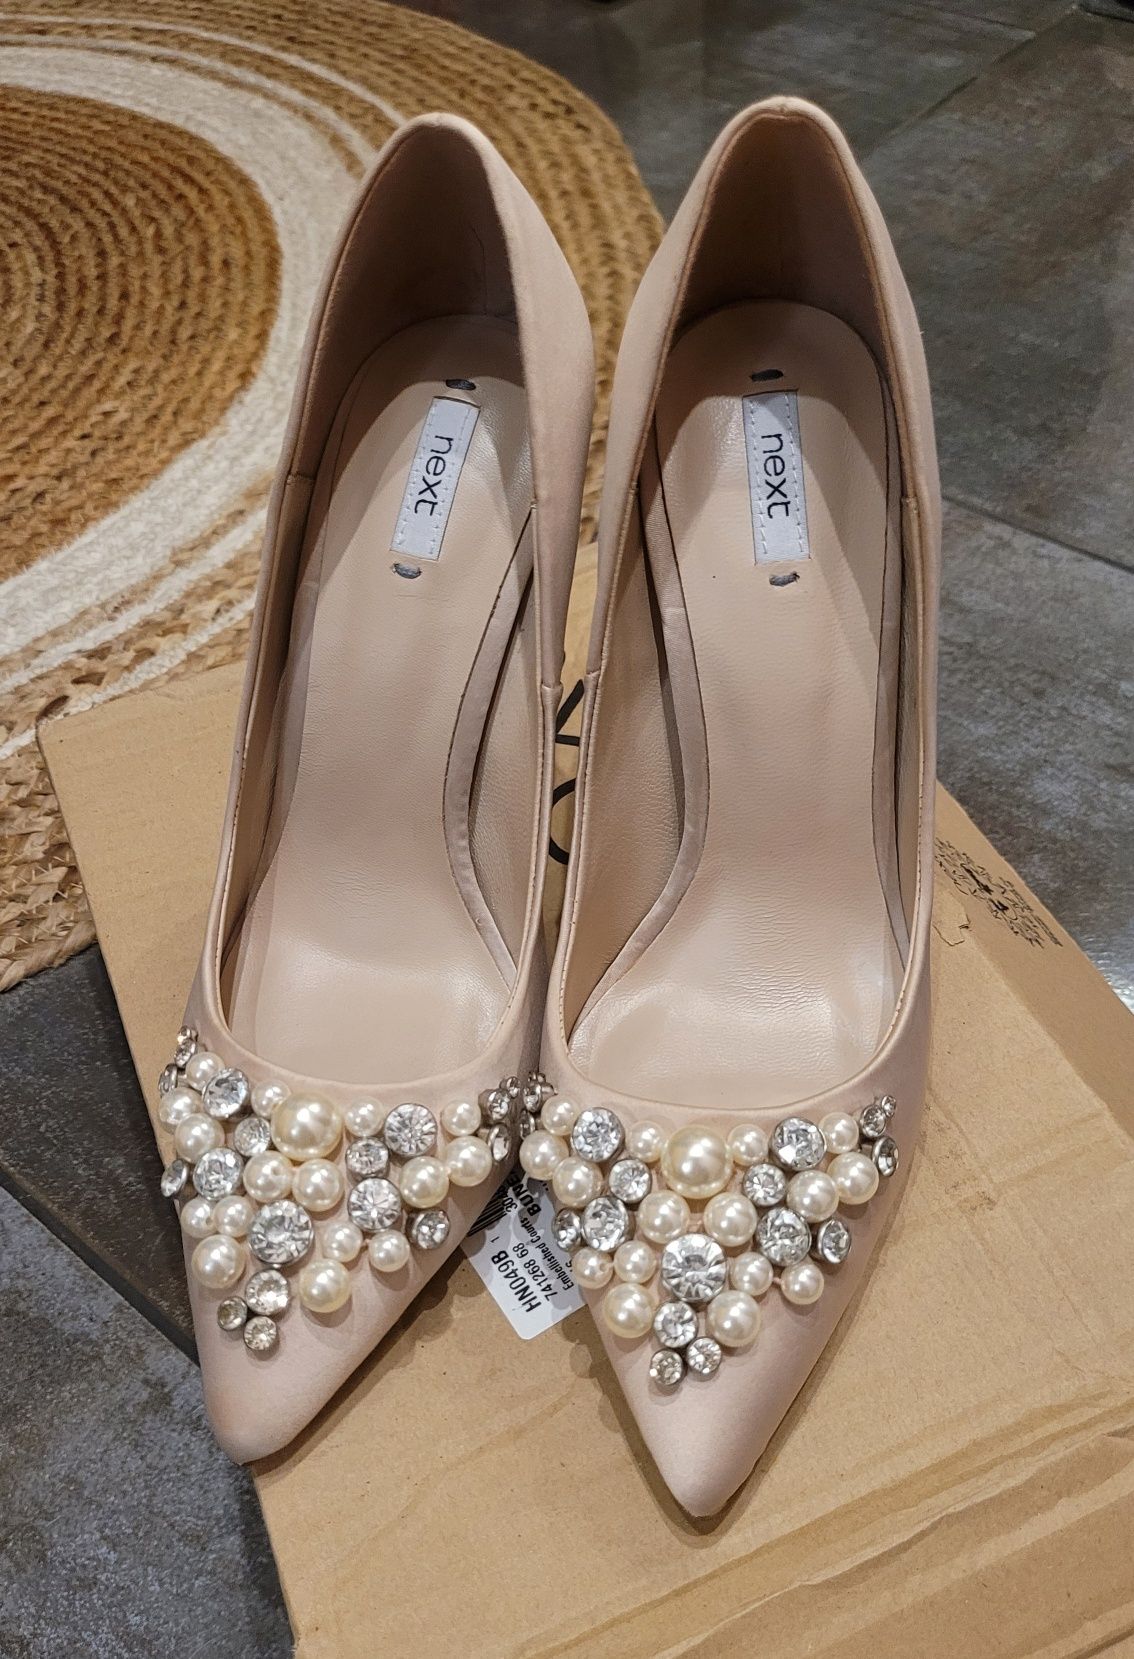 Pantofi Next cu perle și pietre